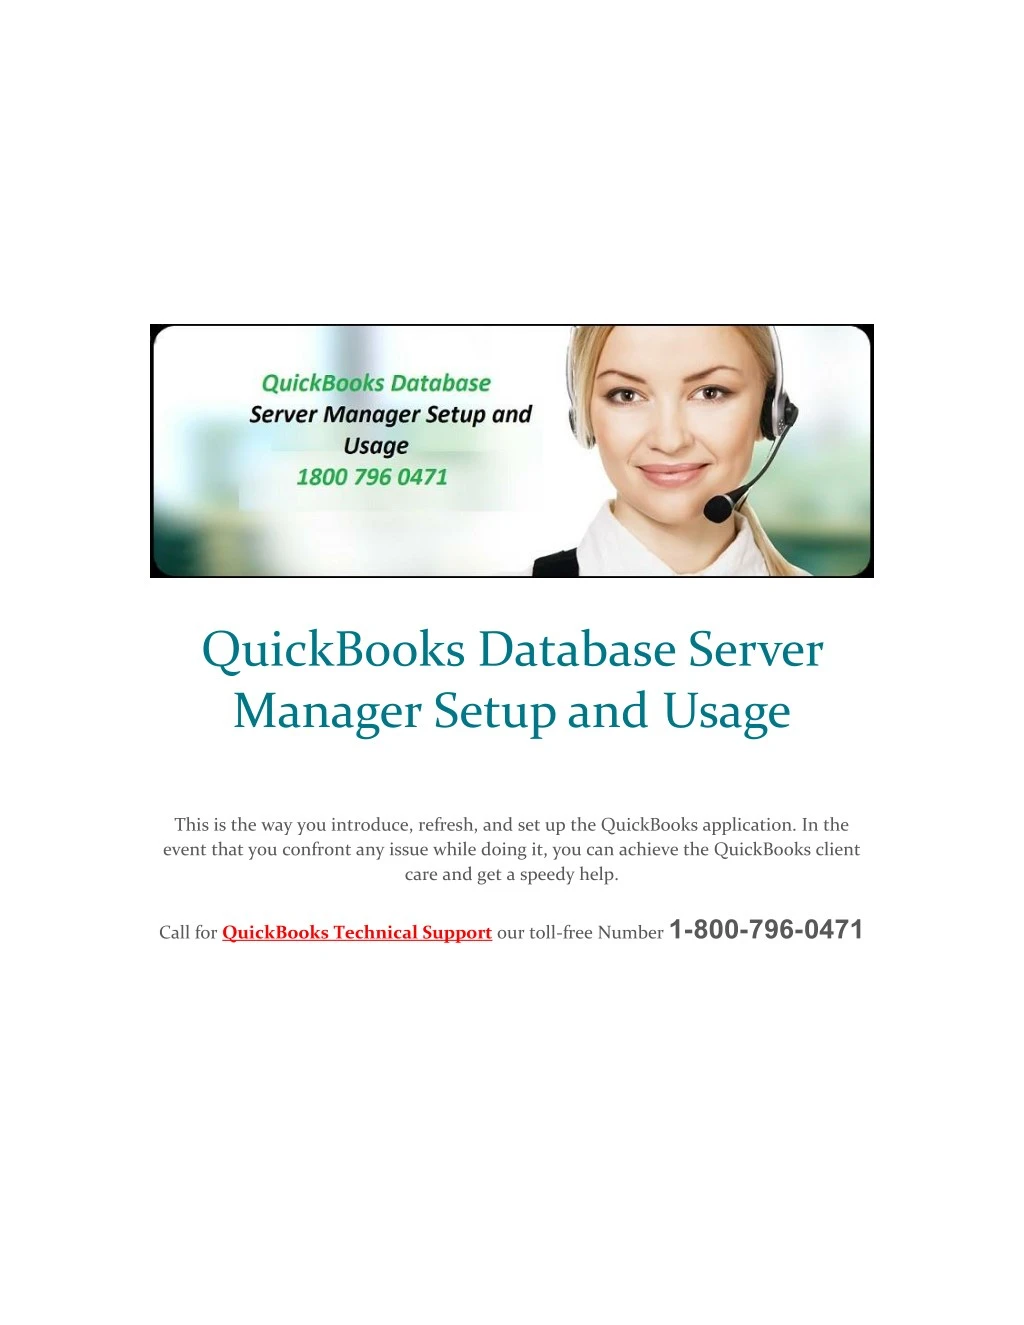 quickbooks database server manager setup and usage